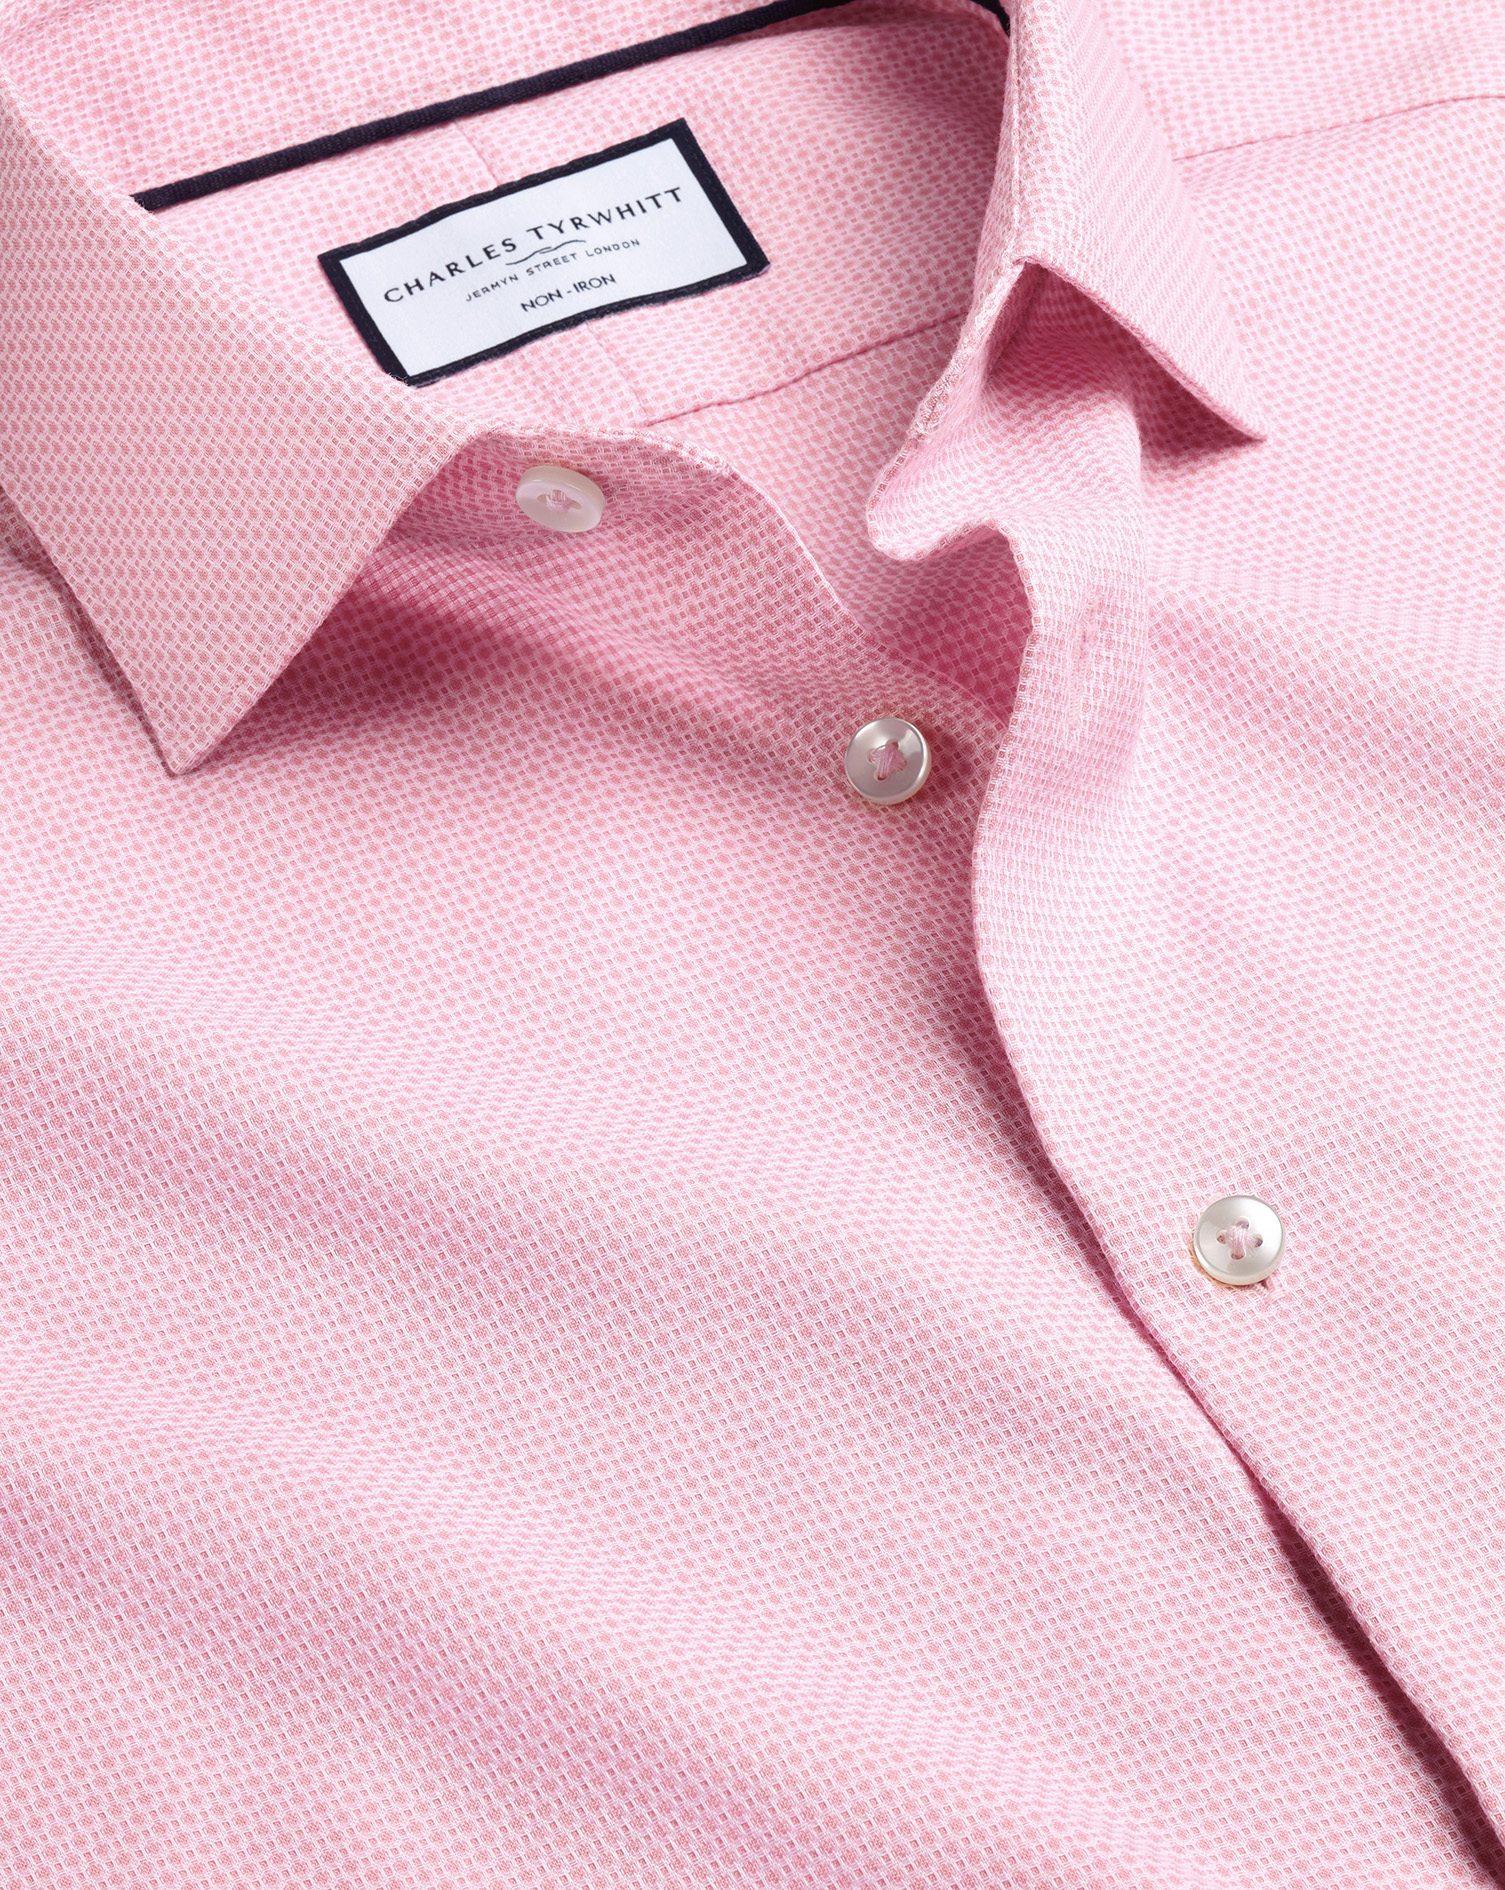 Men's Charles Tyrwhitt Non-Iron Stretch Texture Oval Dress Shirt - Pink Single Cuff Size 17.5/36 Cot